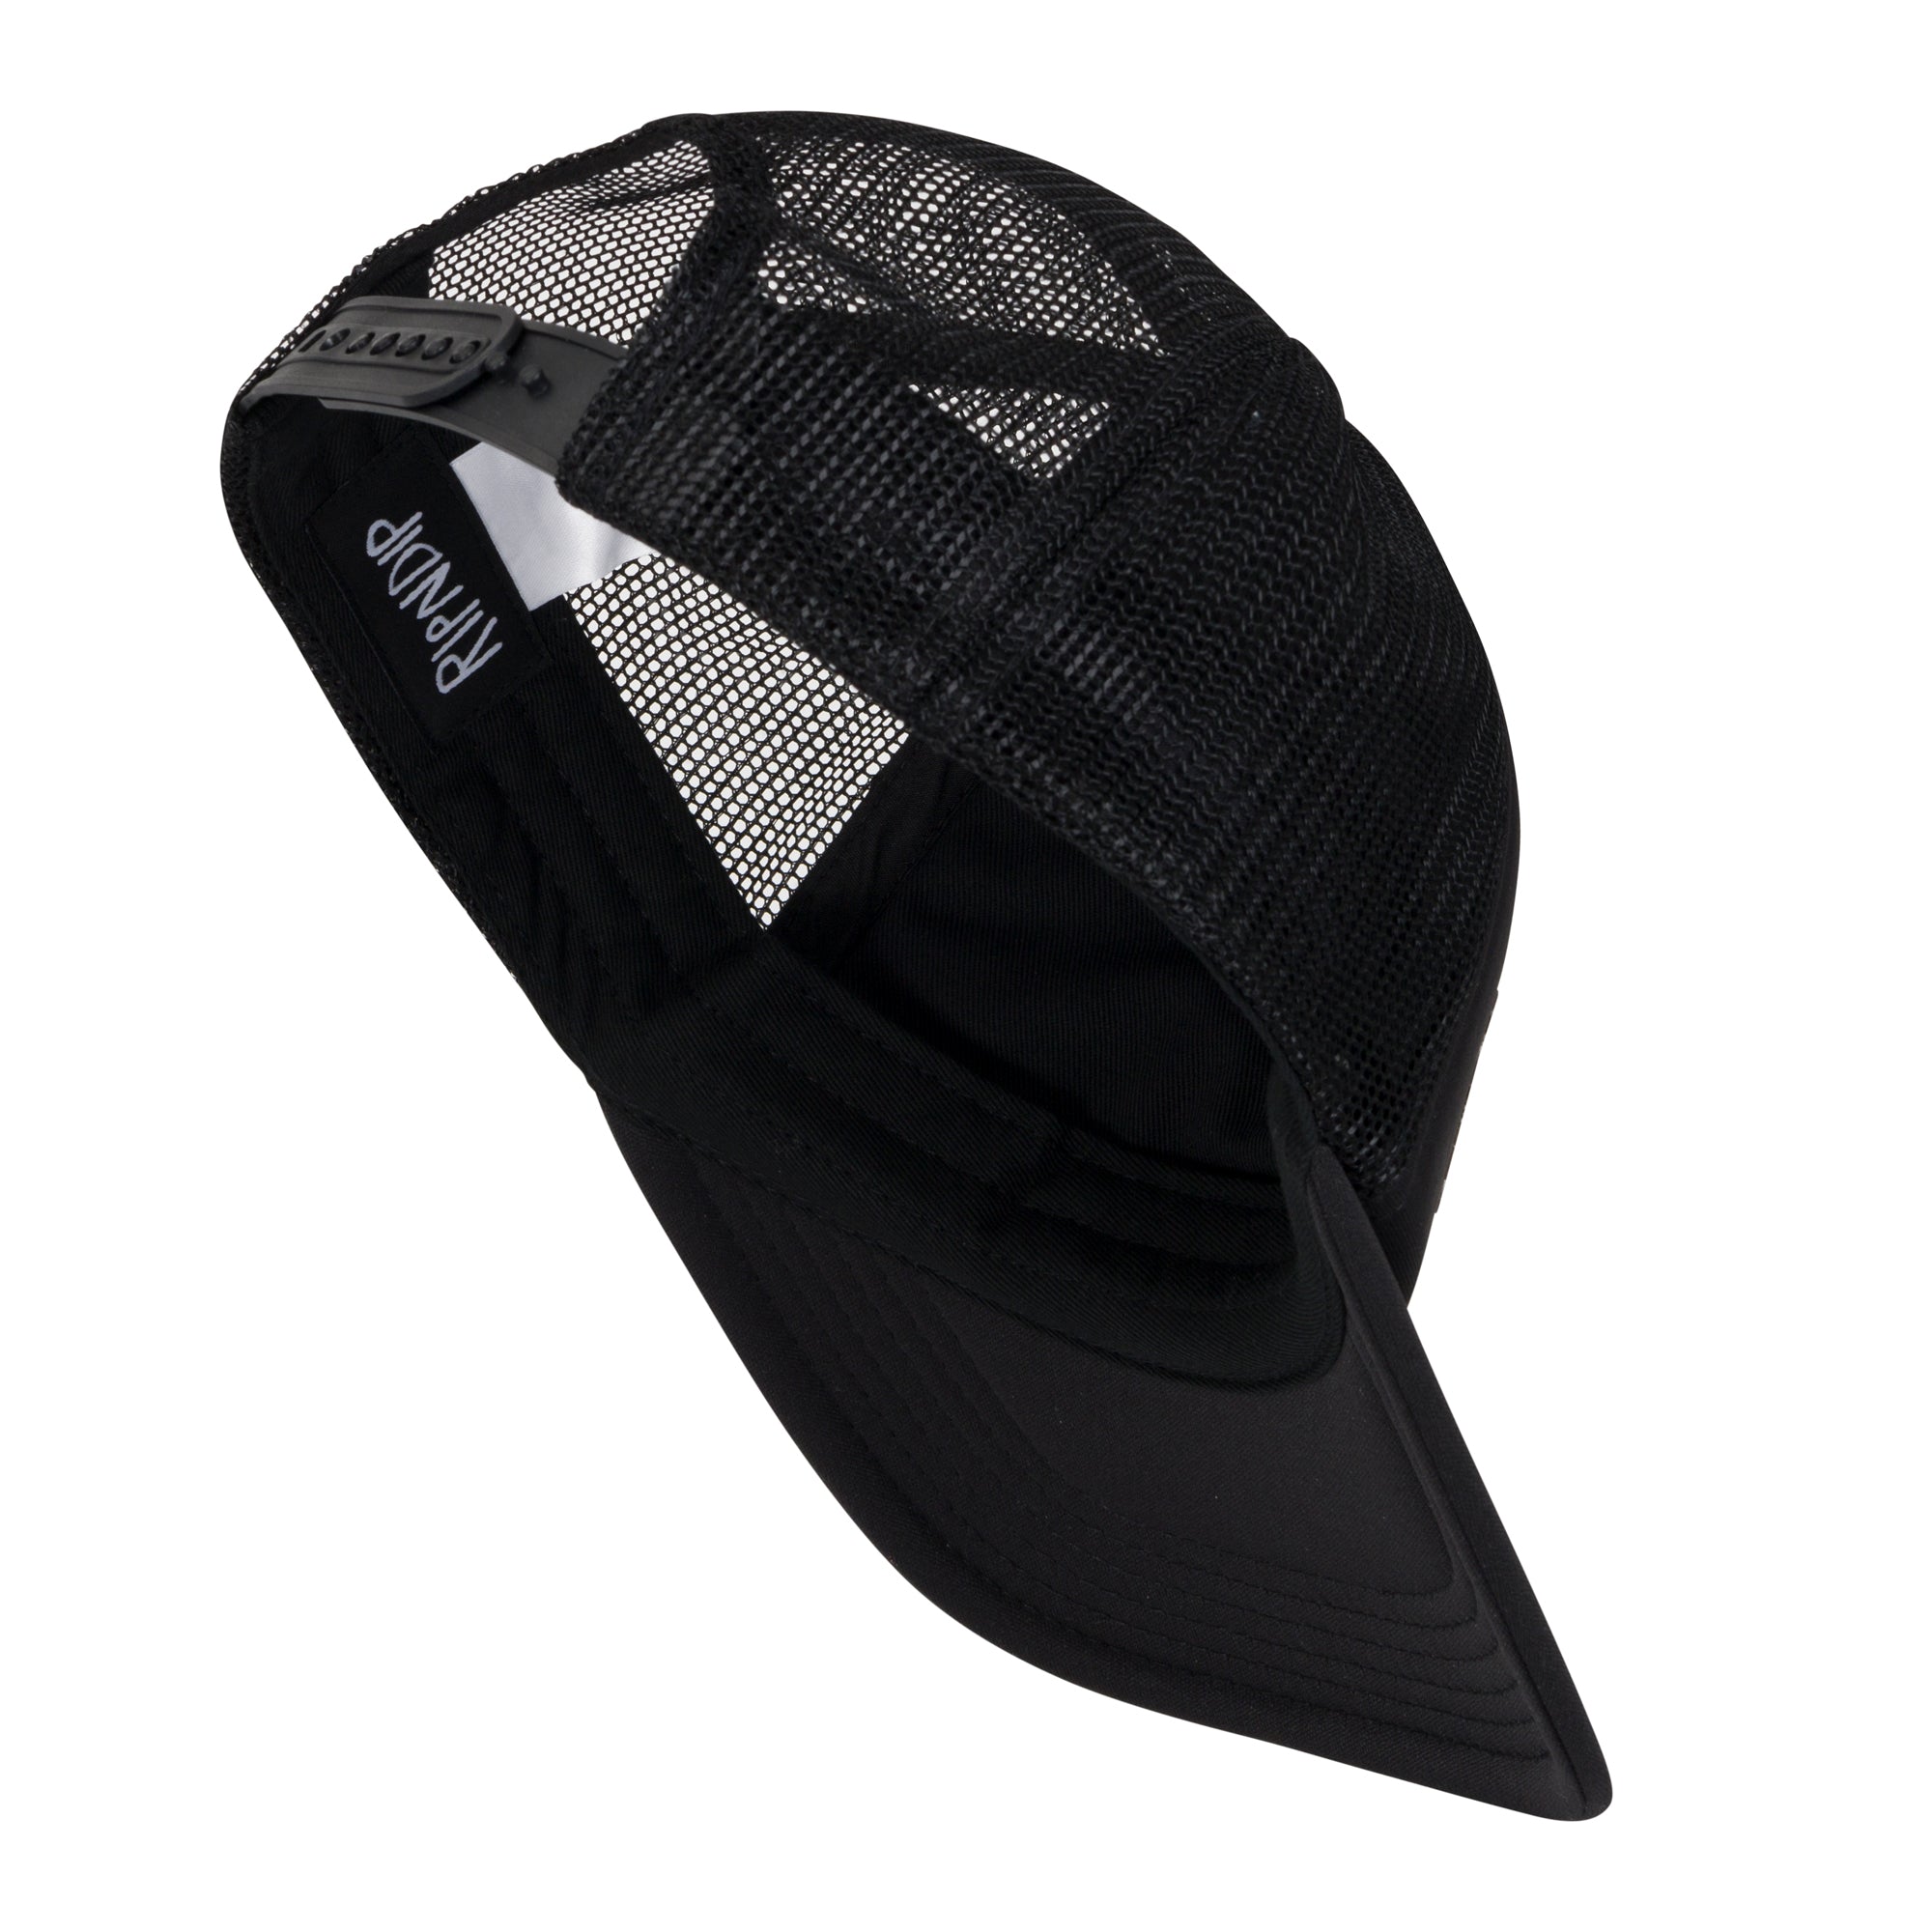 RIPNDIP Is This Real Life Trucker Hat (Black)